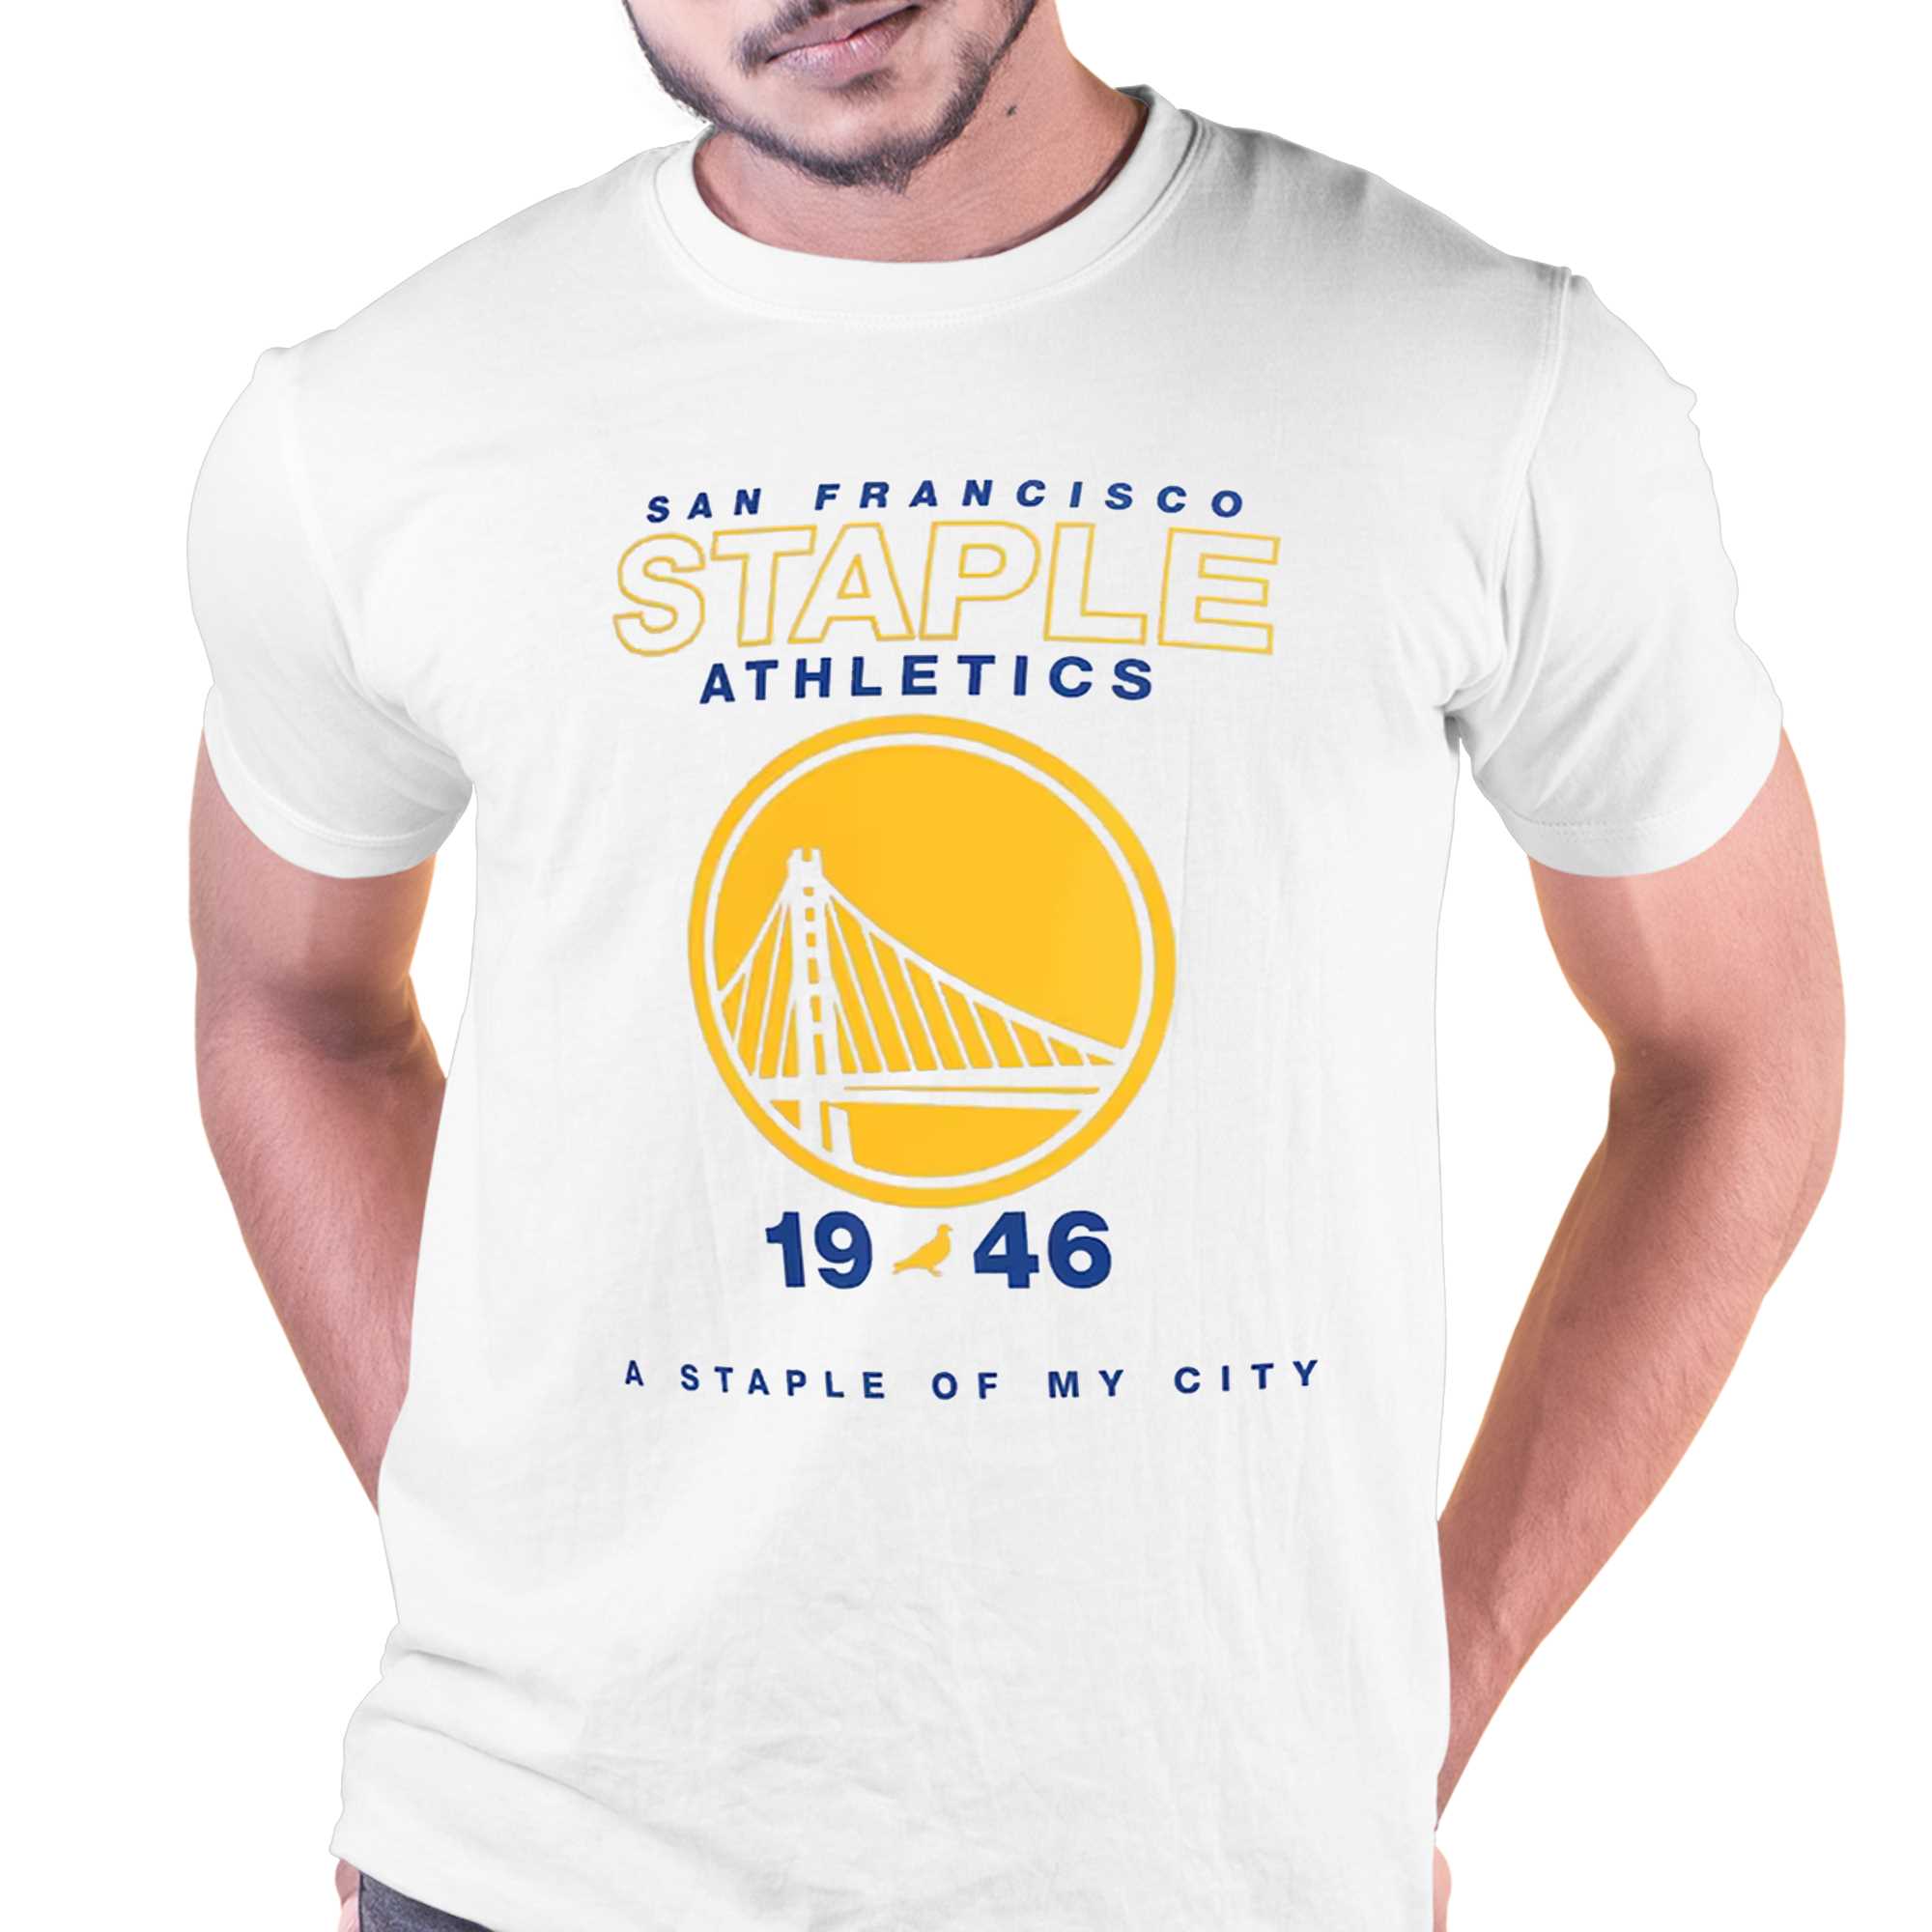 Indiana Pacers Nba X Staple Home Team T-shirt